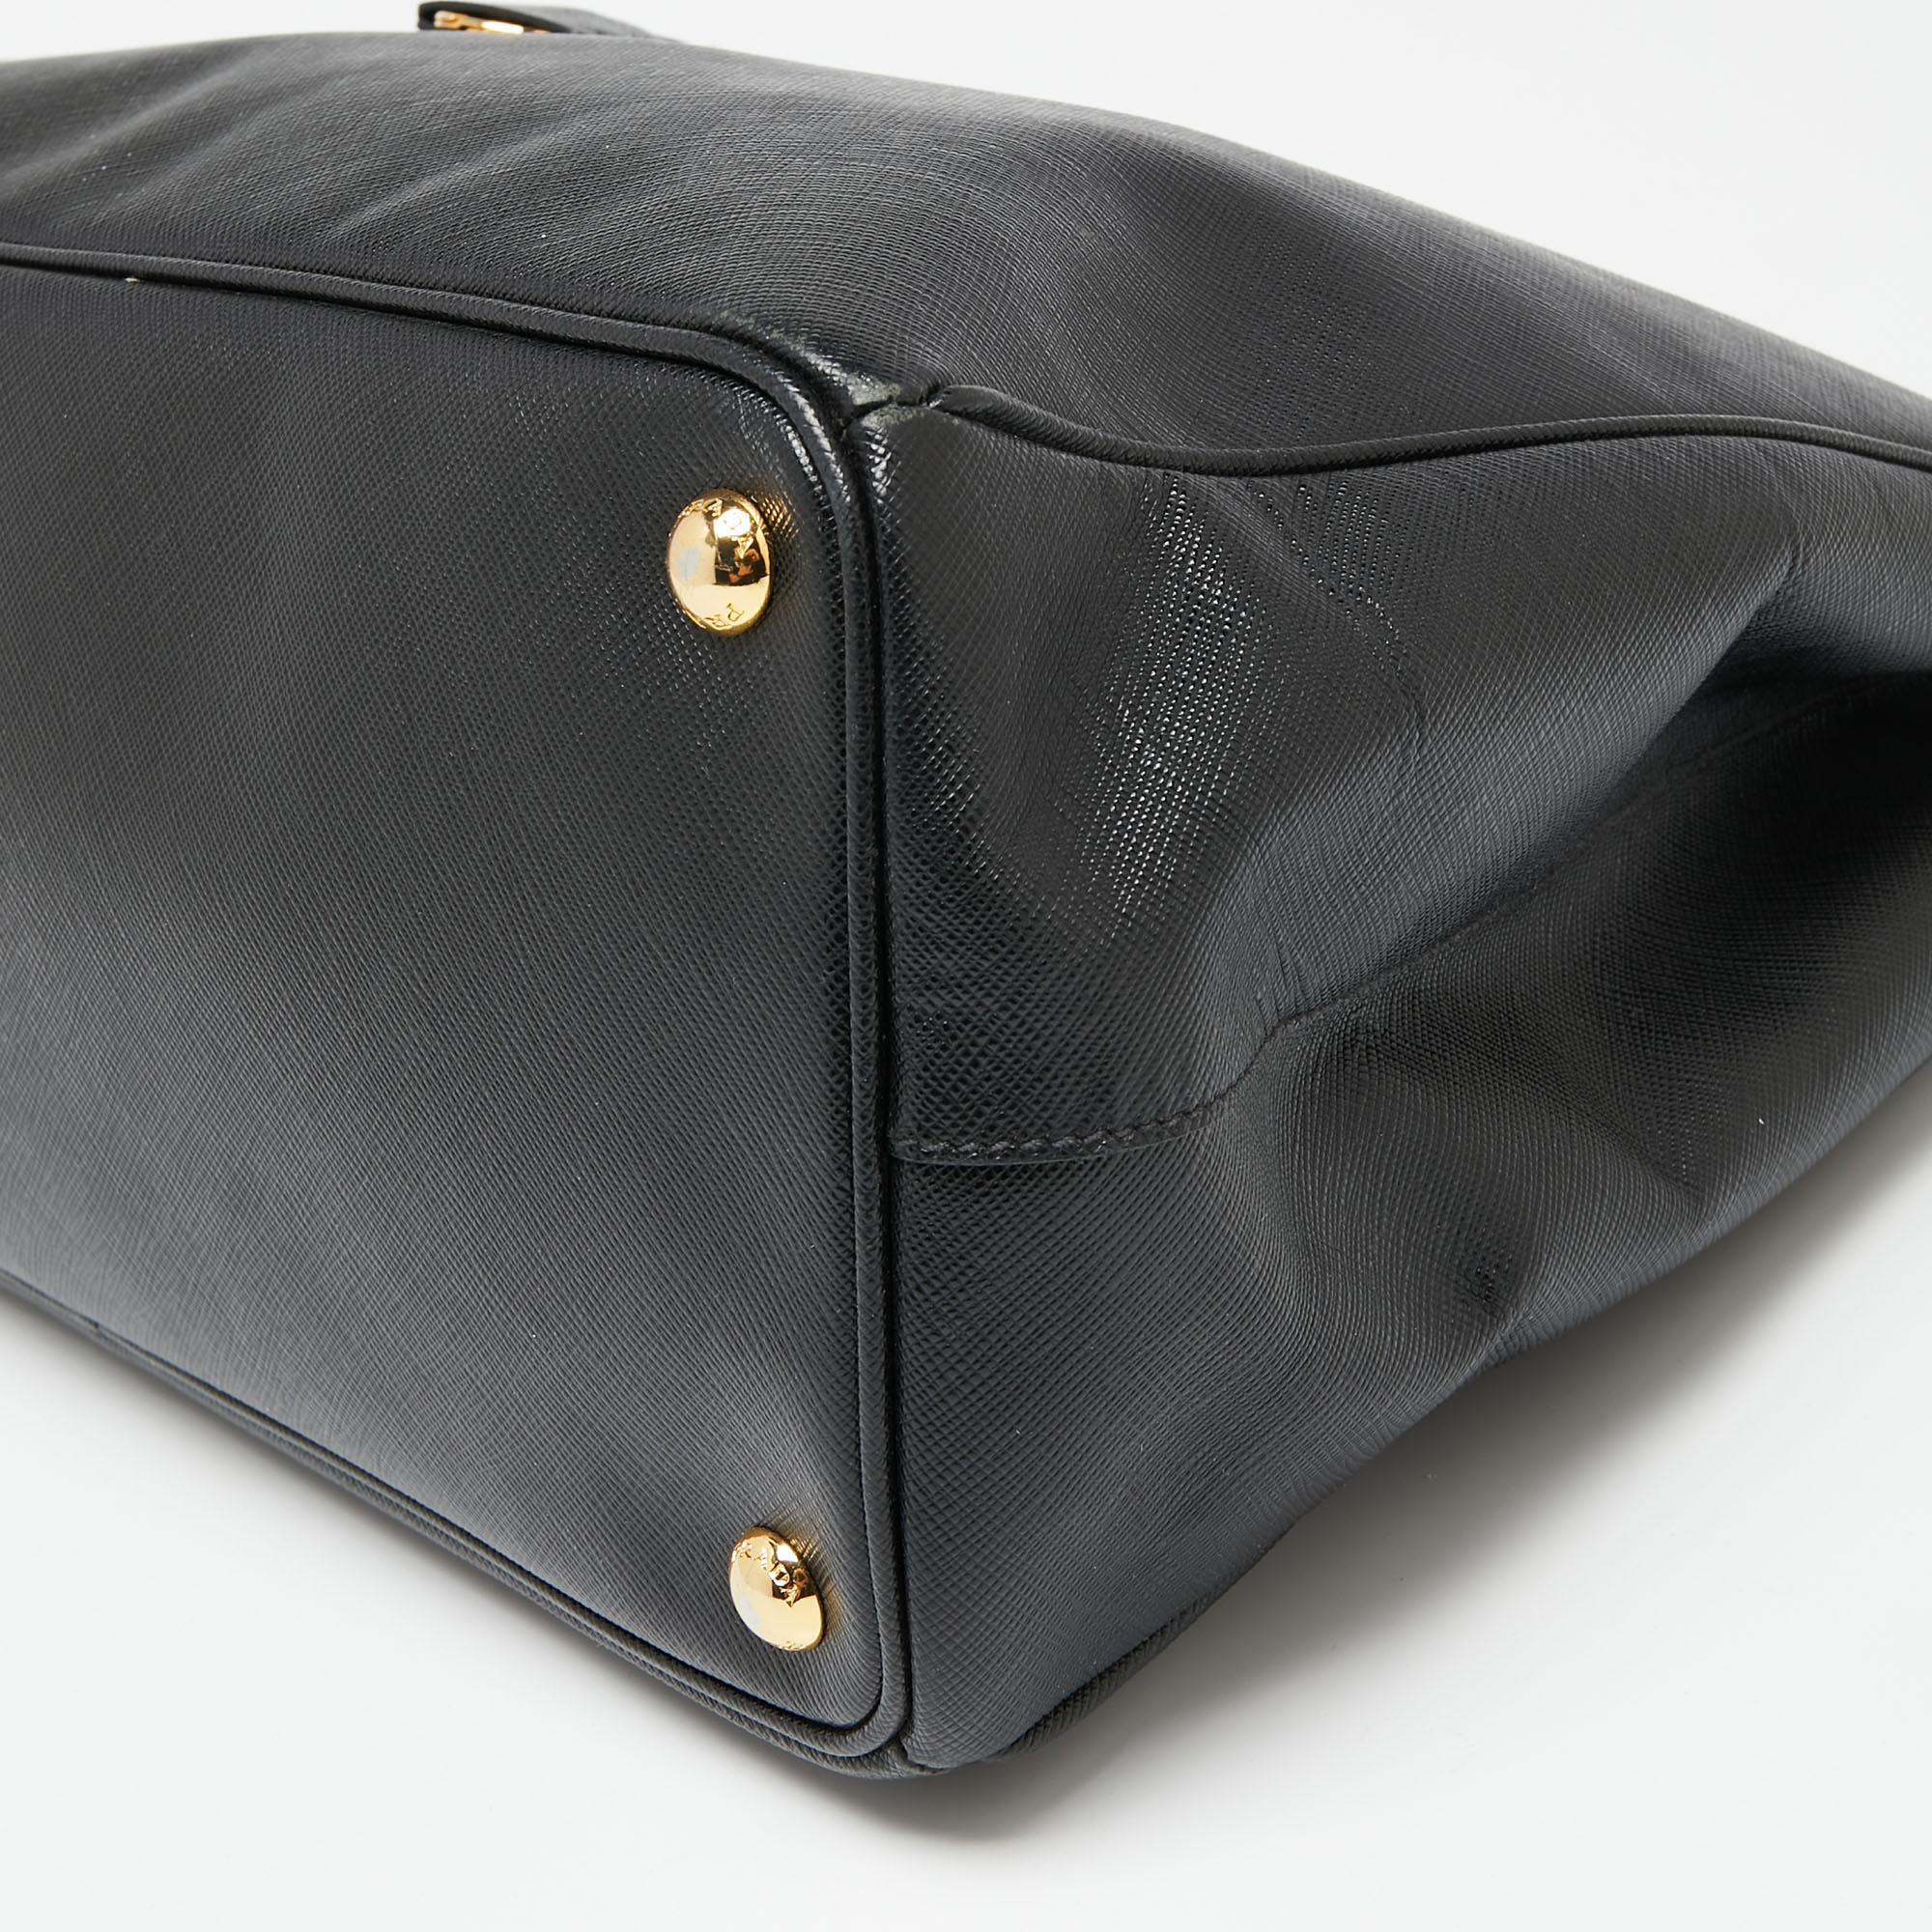 Prada Black Saffiano Leather Large Galleria Double Zip Tote 7